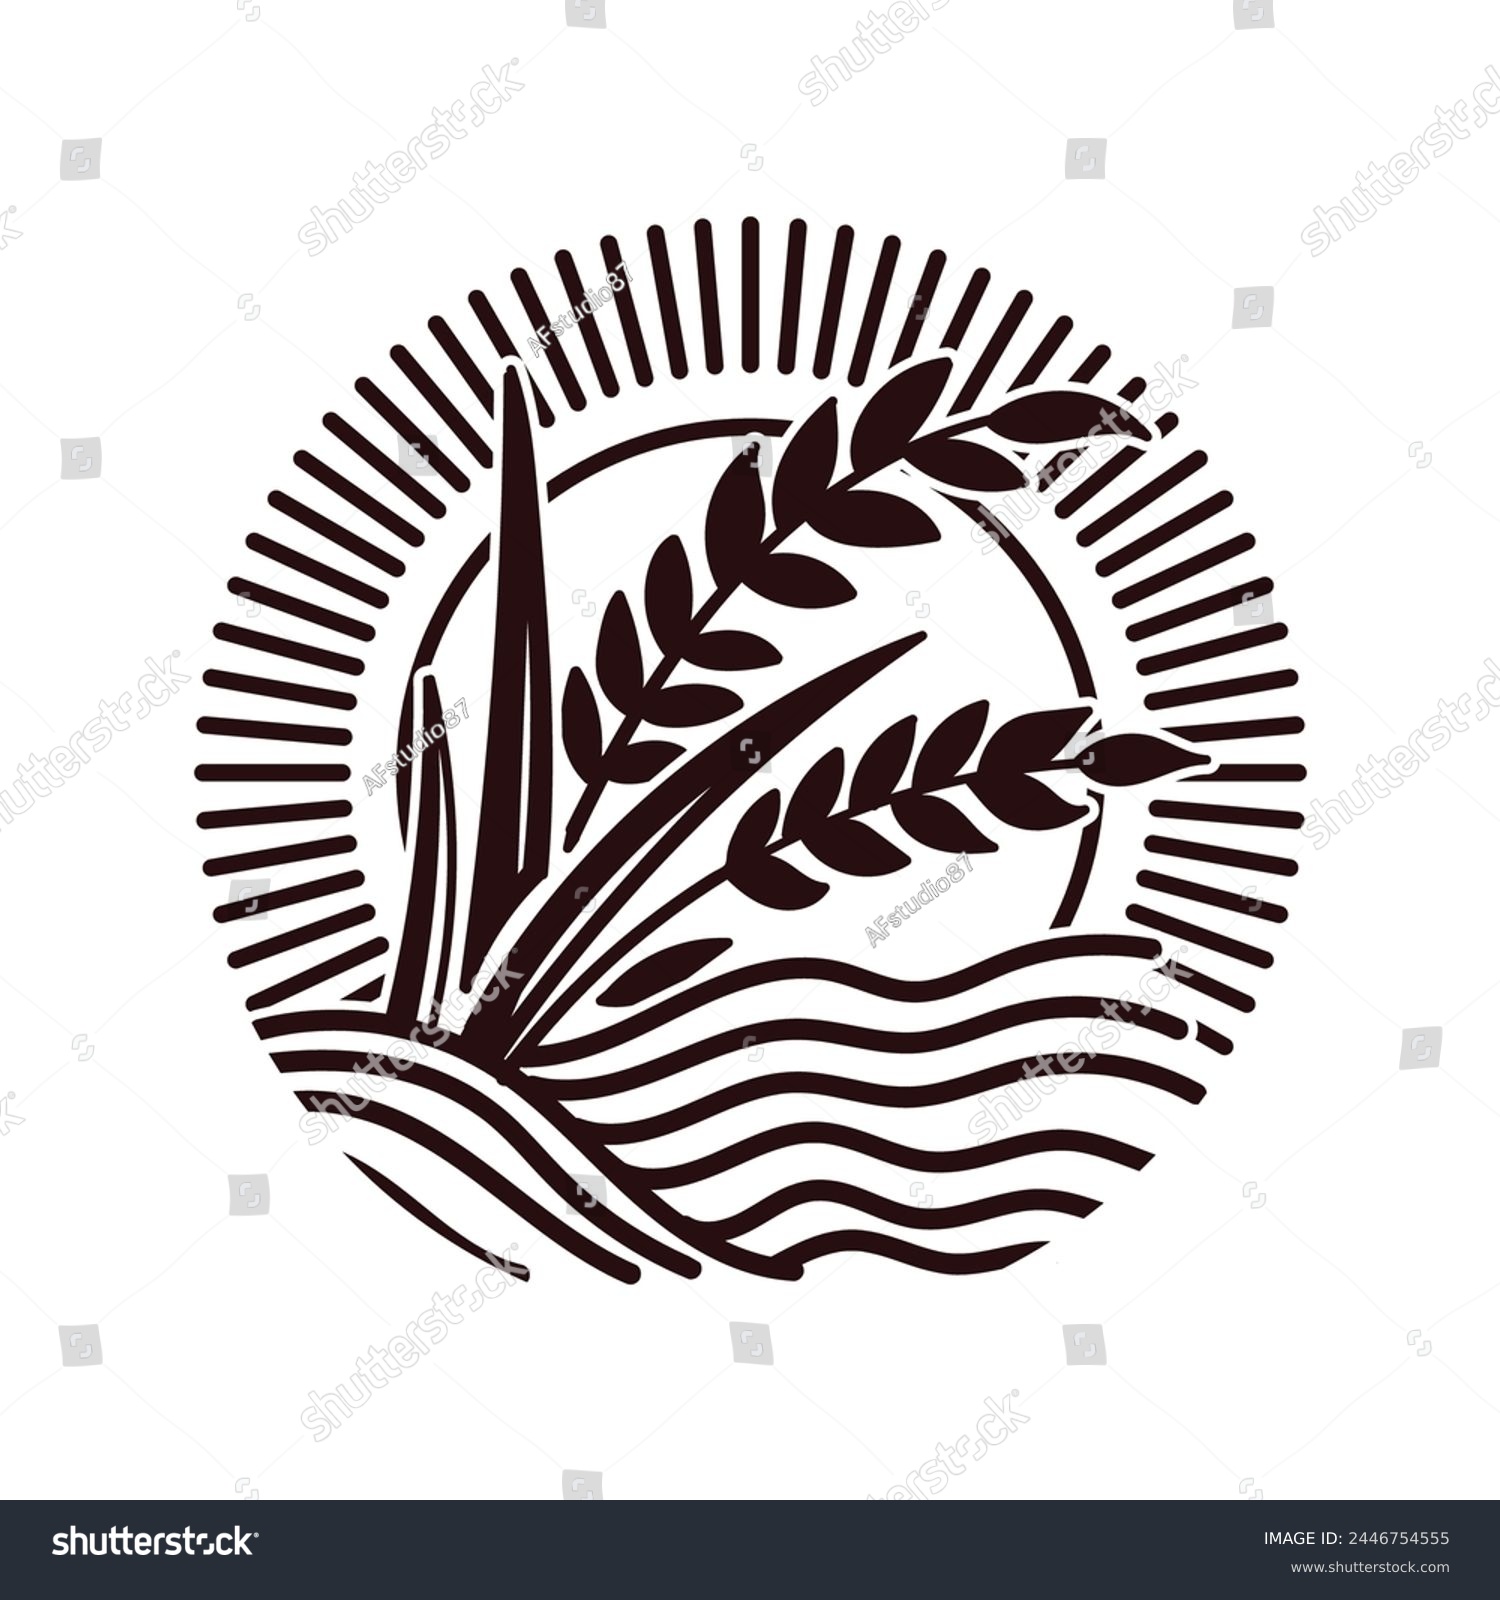 SVG of Circular Sun with Wheat Rice Land Farm Symbol Illustration Vector svg